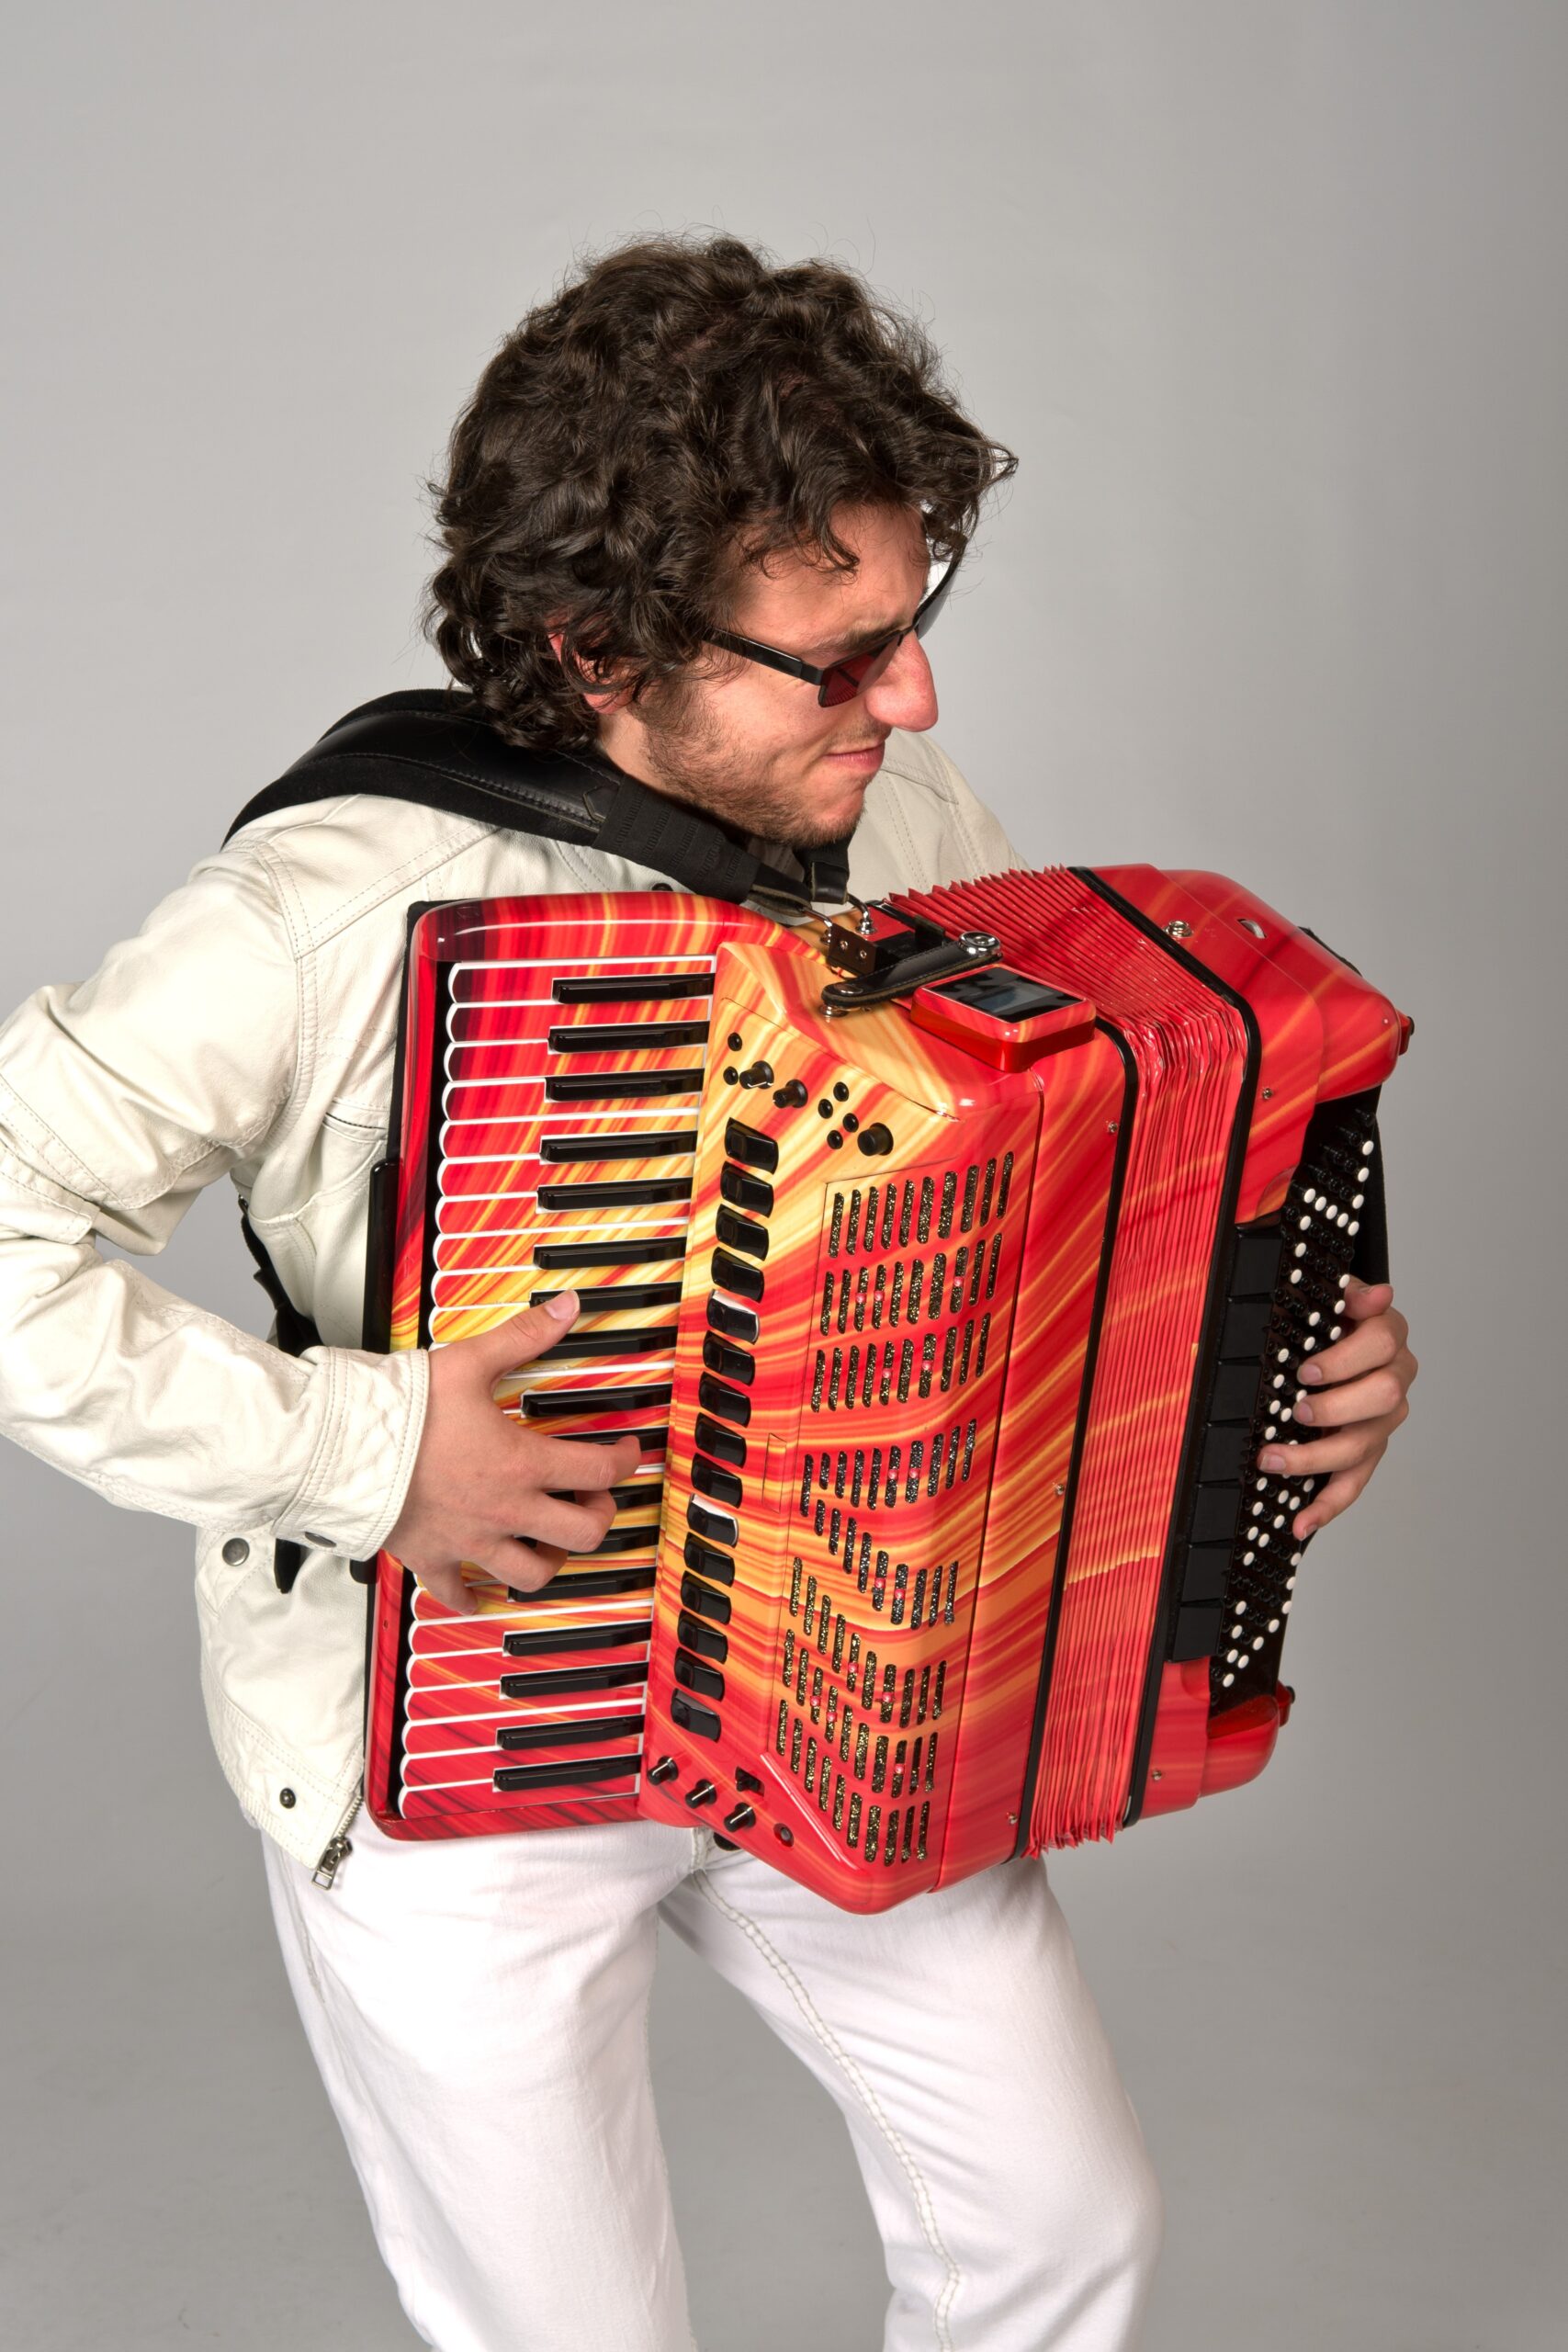 Cory Pesaturo playing accordion